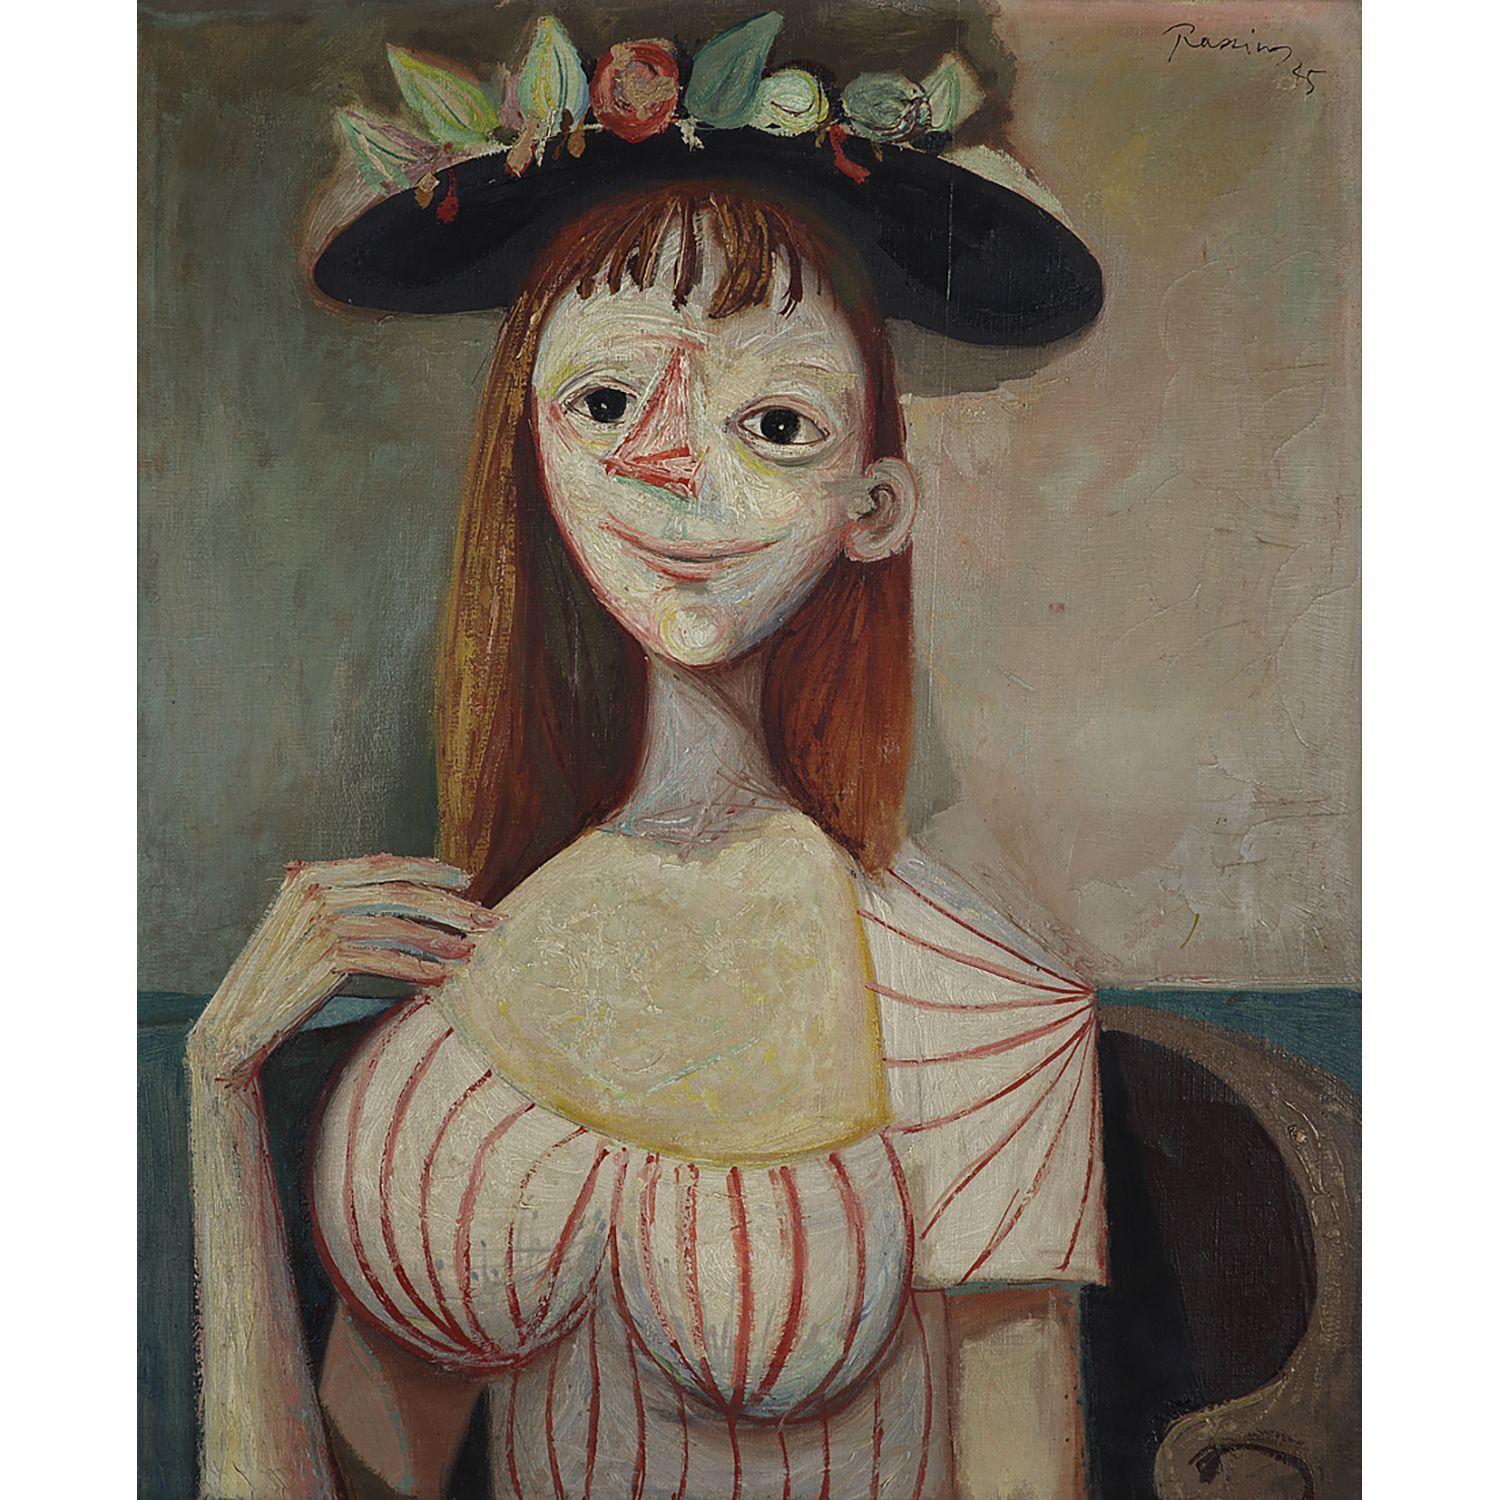 Null 马利奥-普拉西诺斯(1916-1985)

红发女孩，1945年

布面油画

右上方有签名和日期 "45"。

背面有副署，标题和日期

布面油画；&hellip;